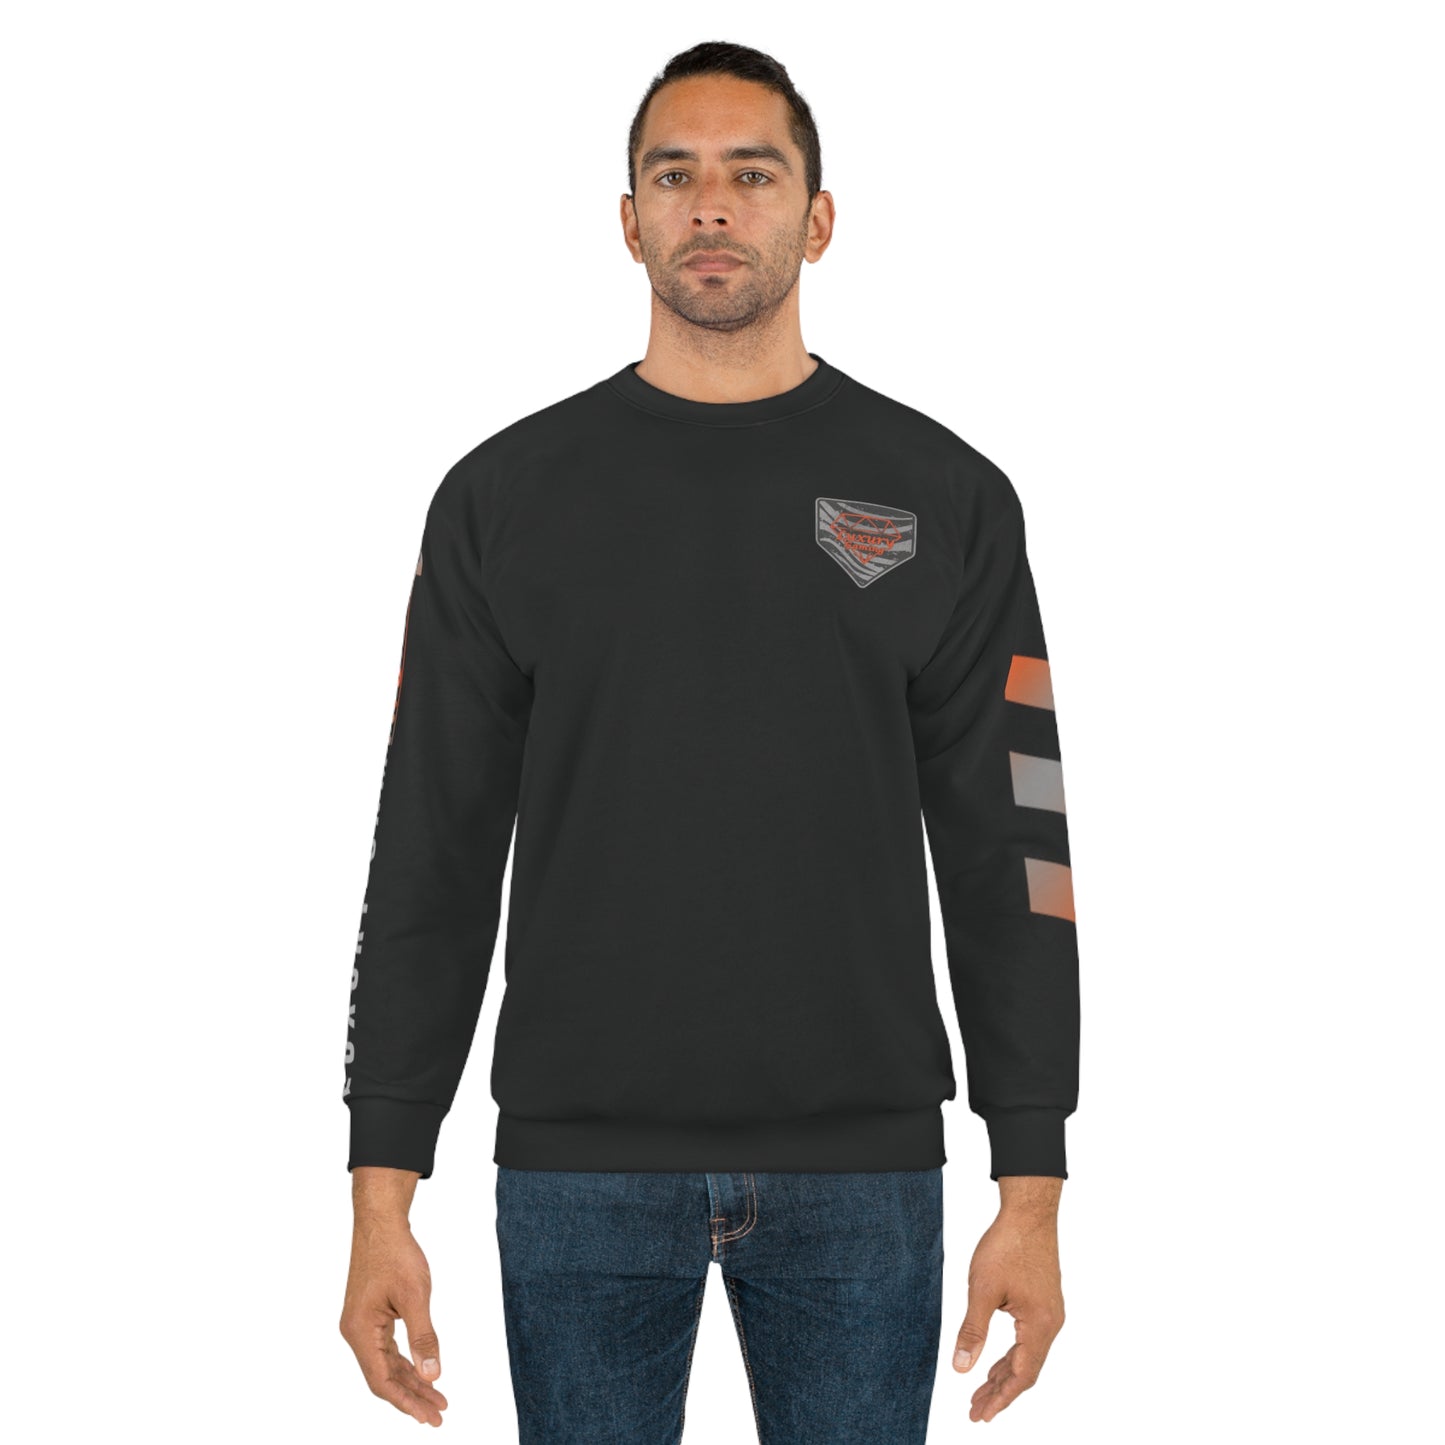 ""Vivid Pursuit:: Luxury Gaming's Black & Orange Unisex Sweatshirt"